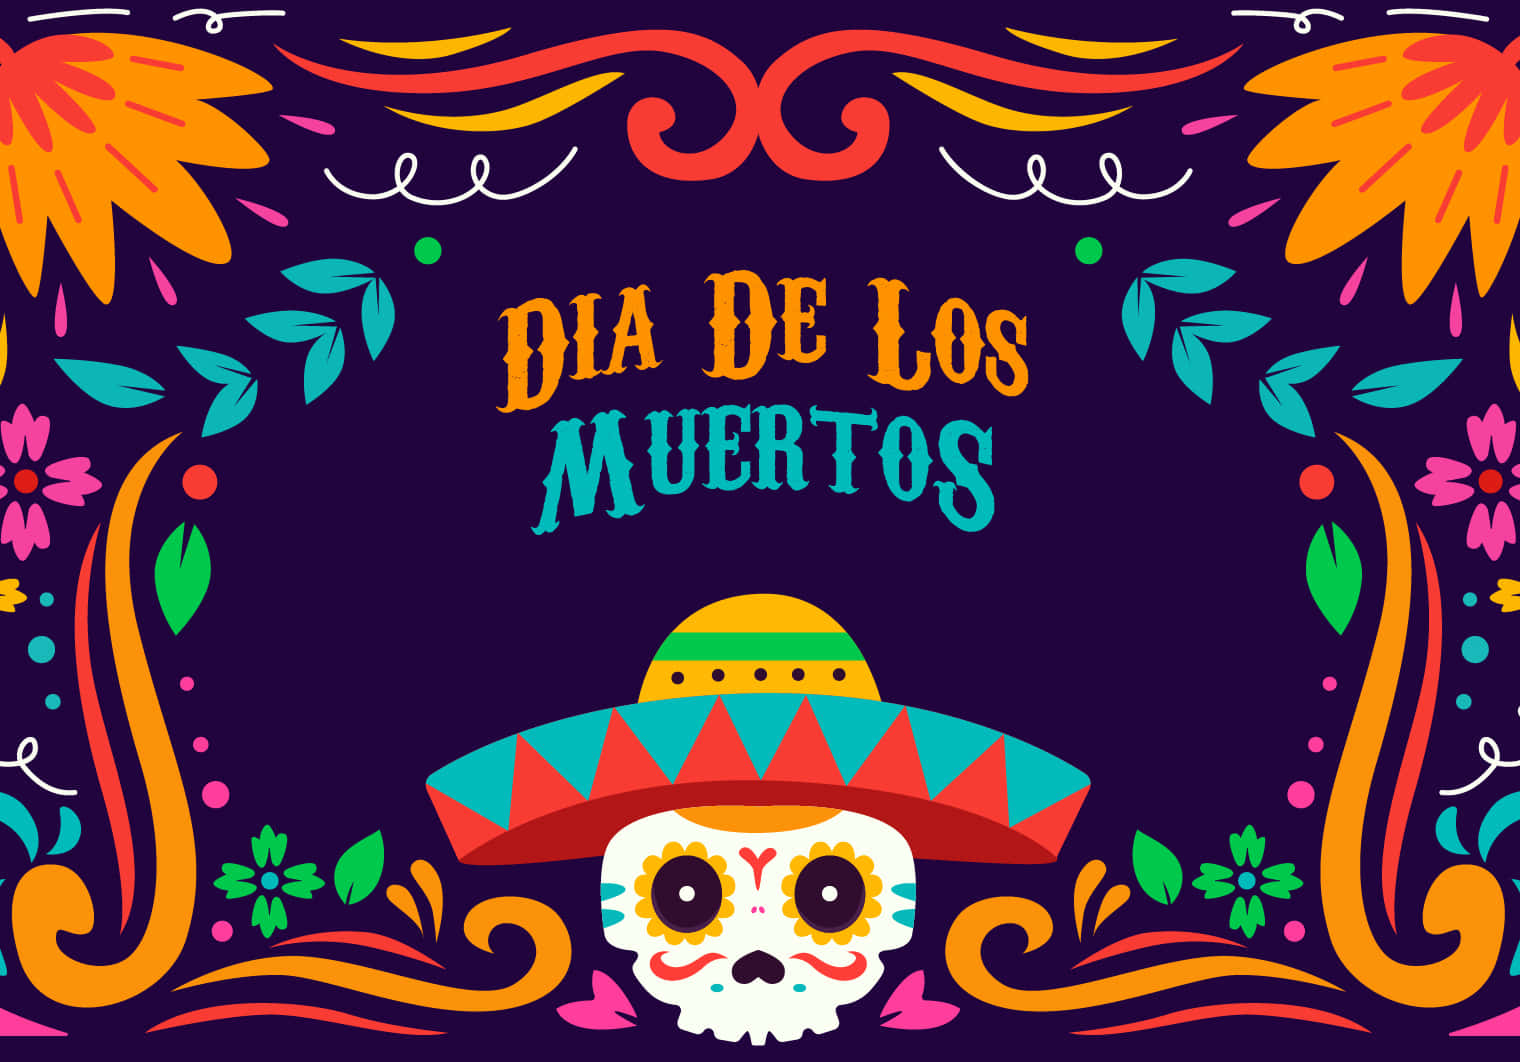 Celebrate Dia de los Muertos with vibrant and colorful festivities